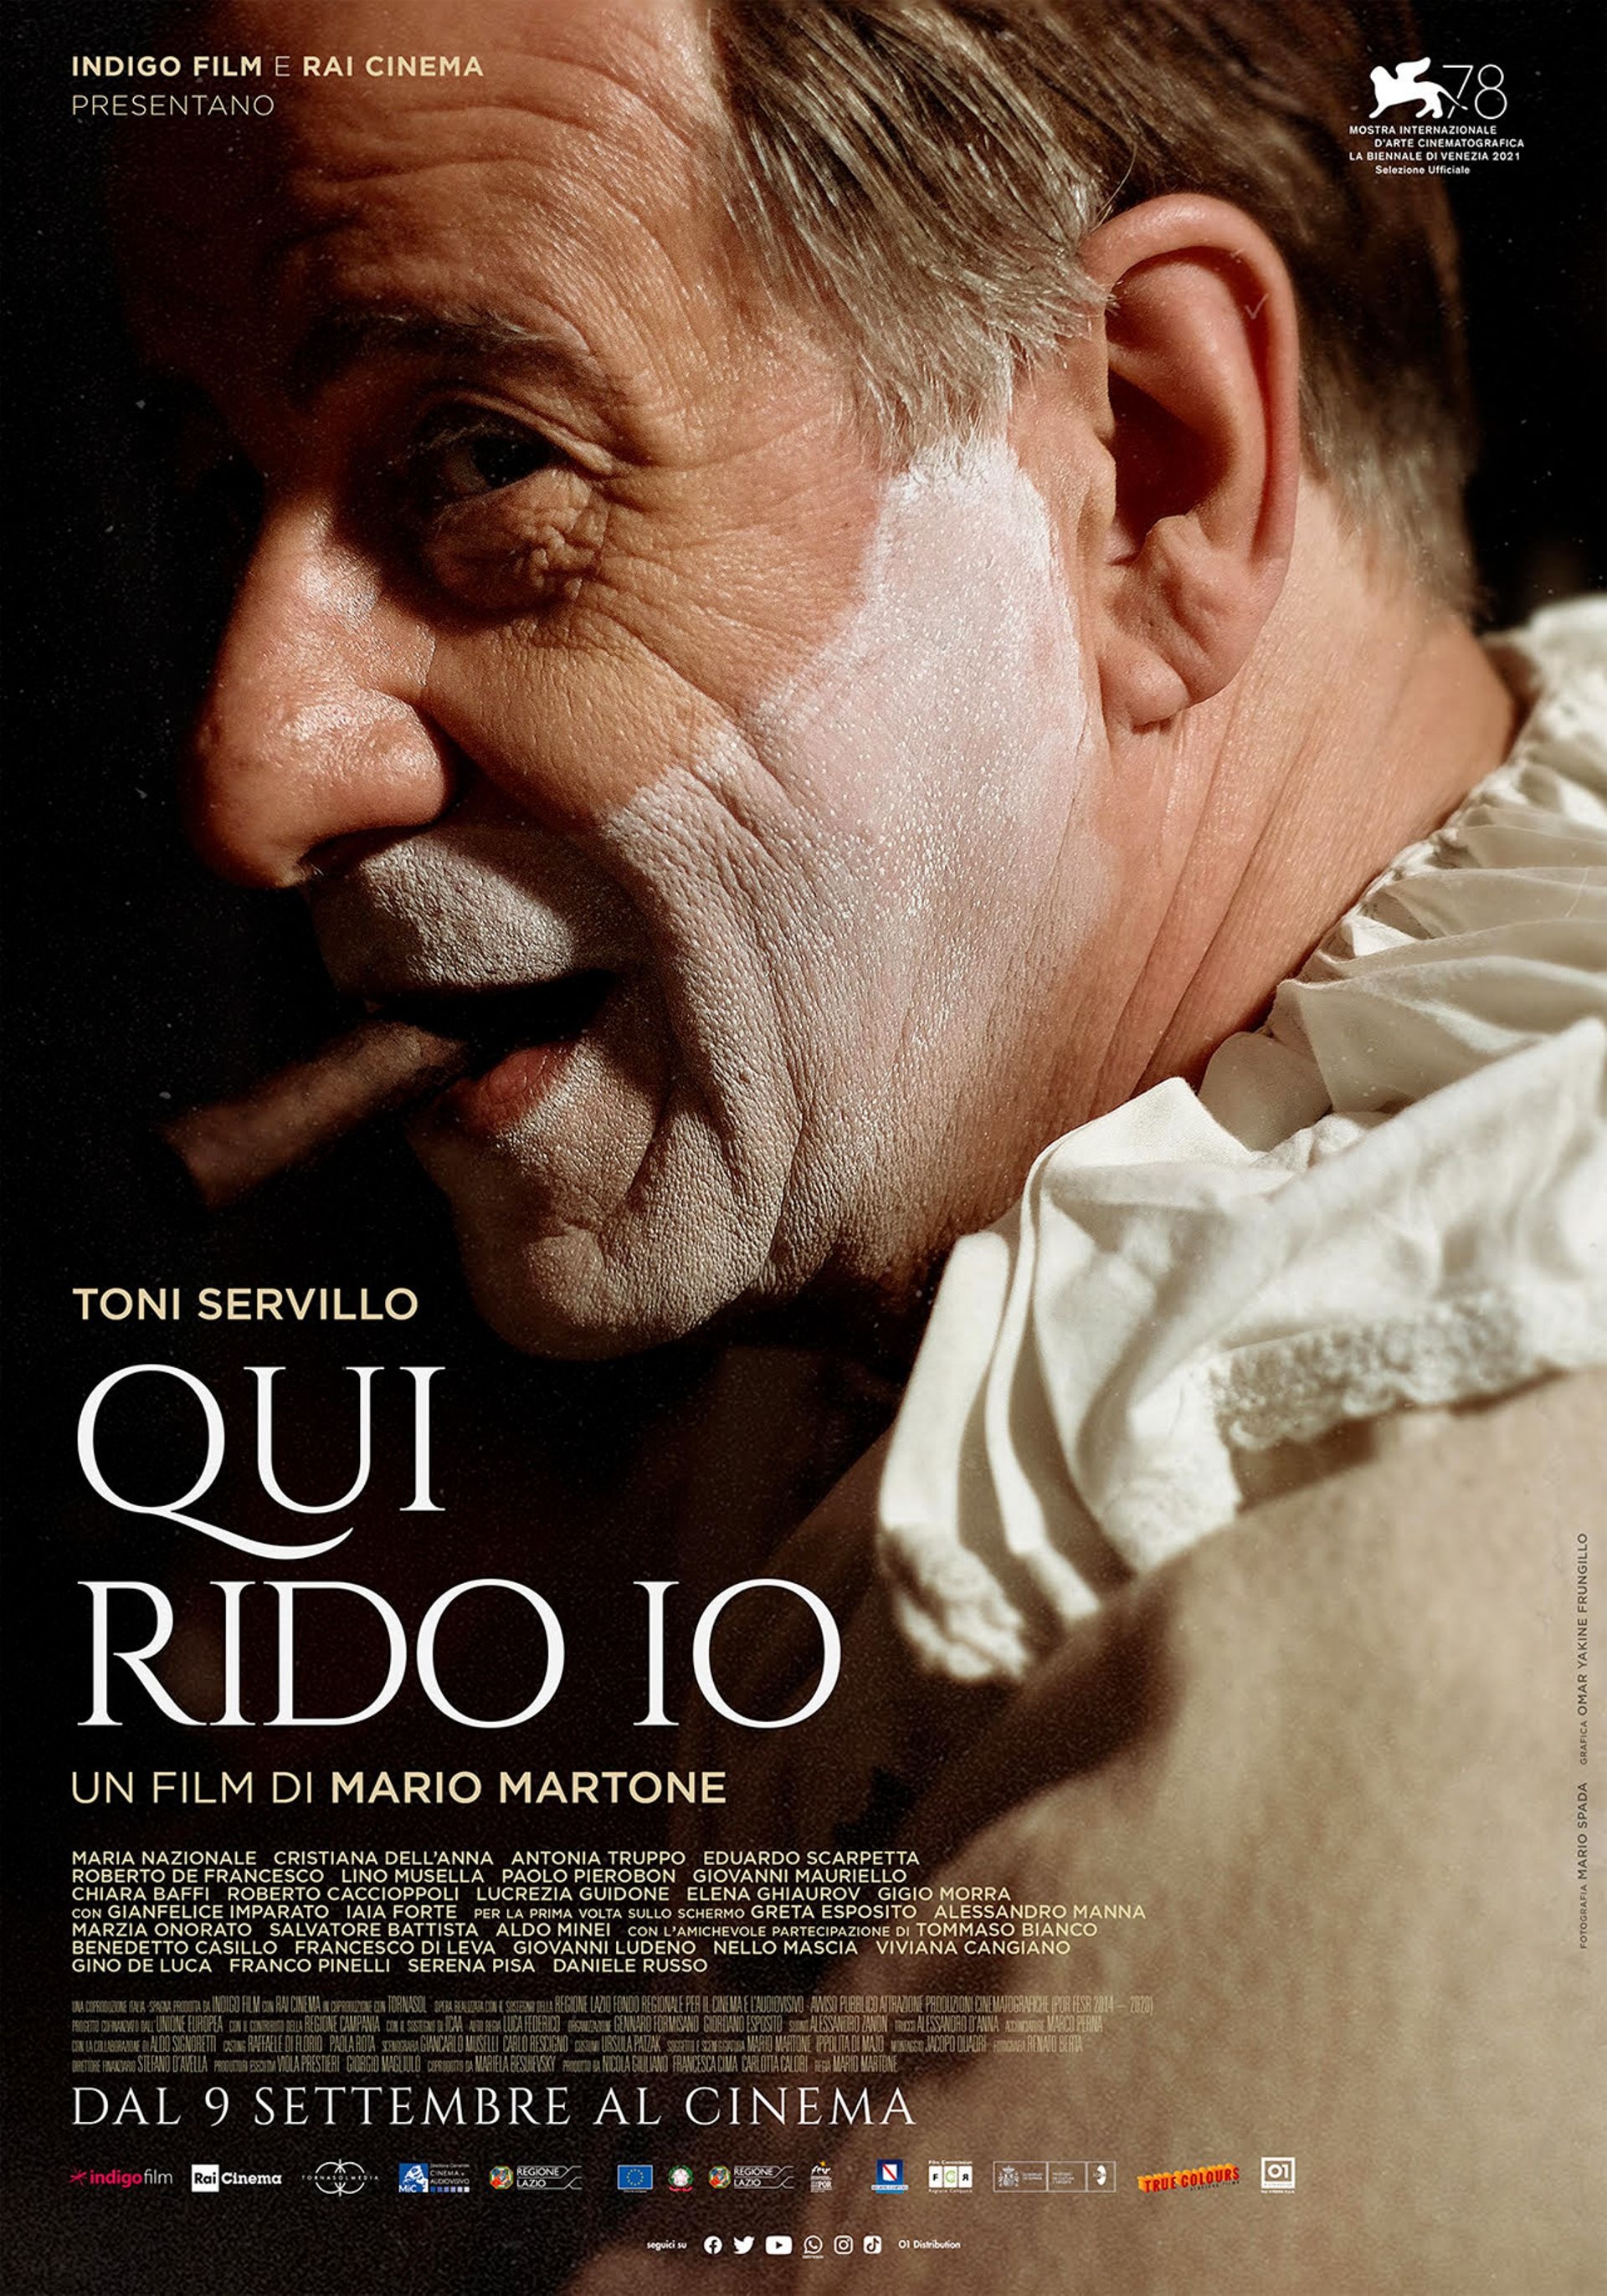 Mega Sized Movie Poster Image for Qui rido io 